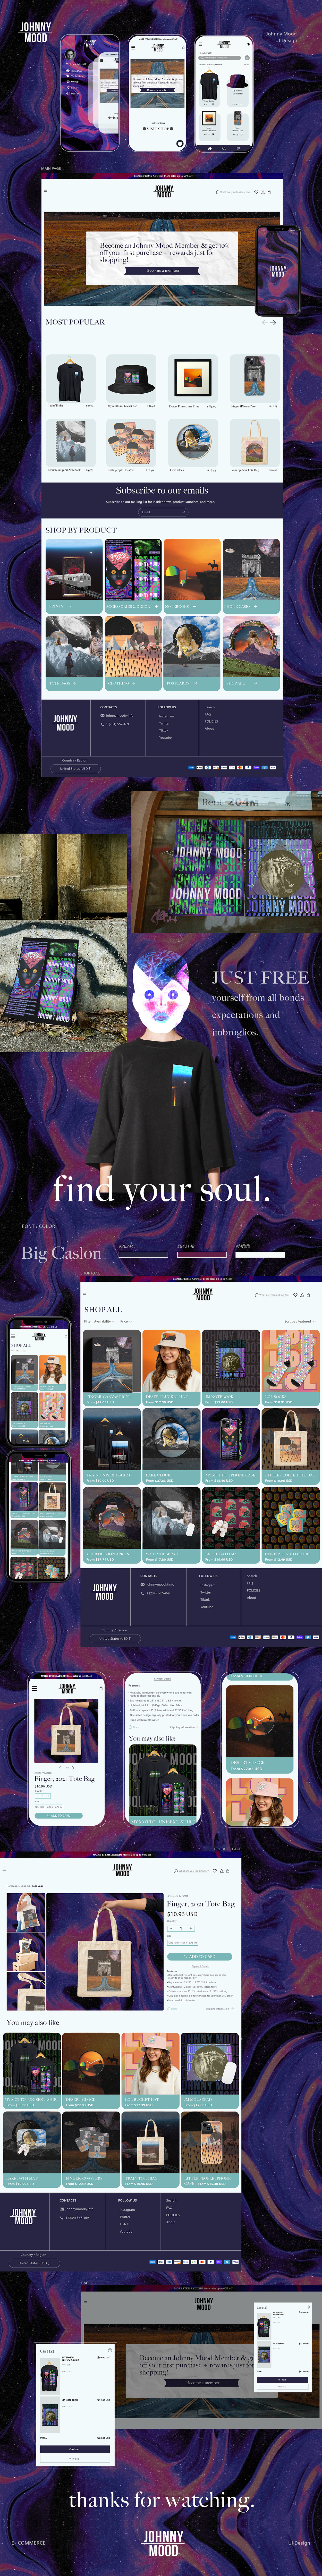 concept Digital Art  e-commerce e-Commerce website online store ui design Web Design 